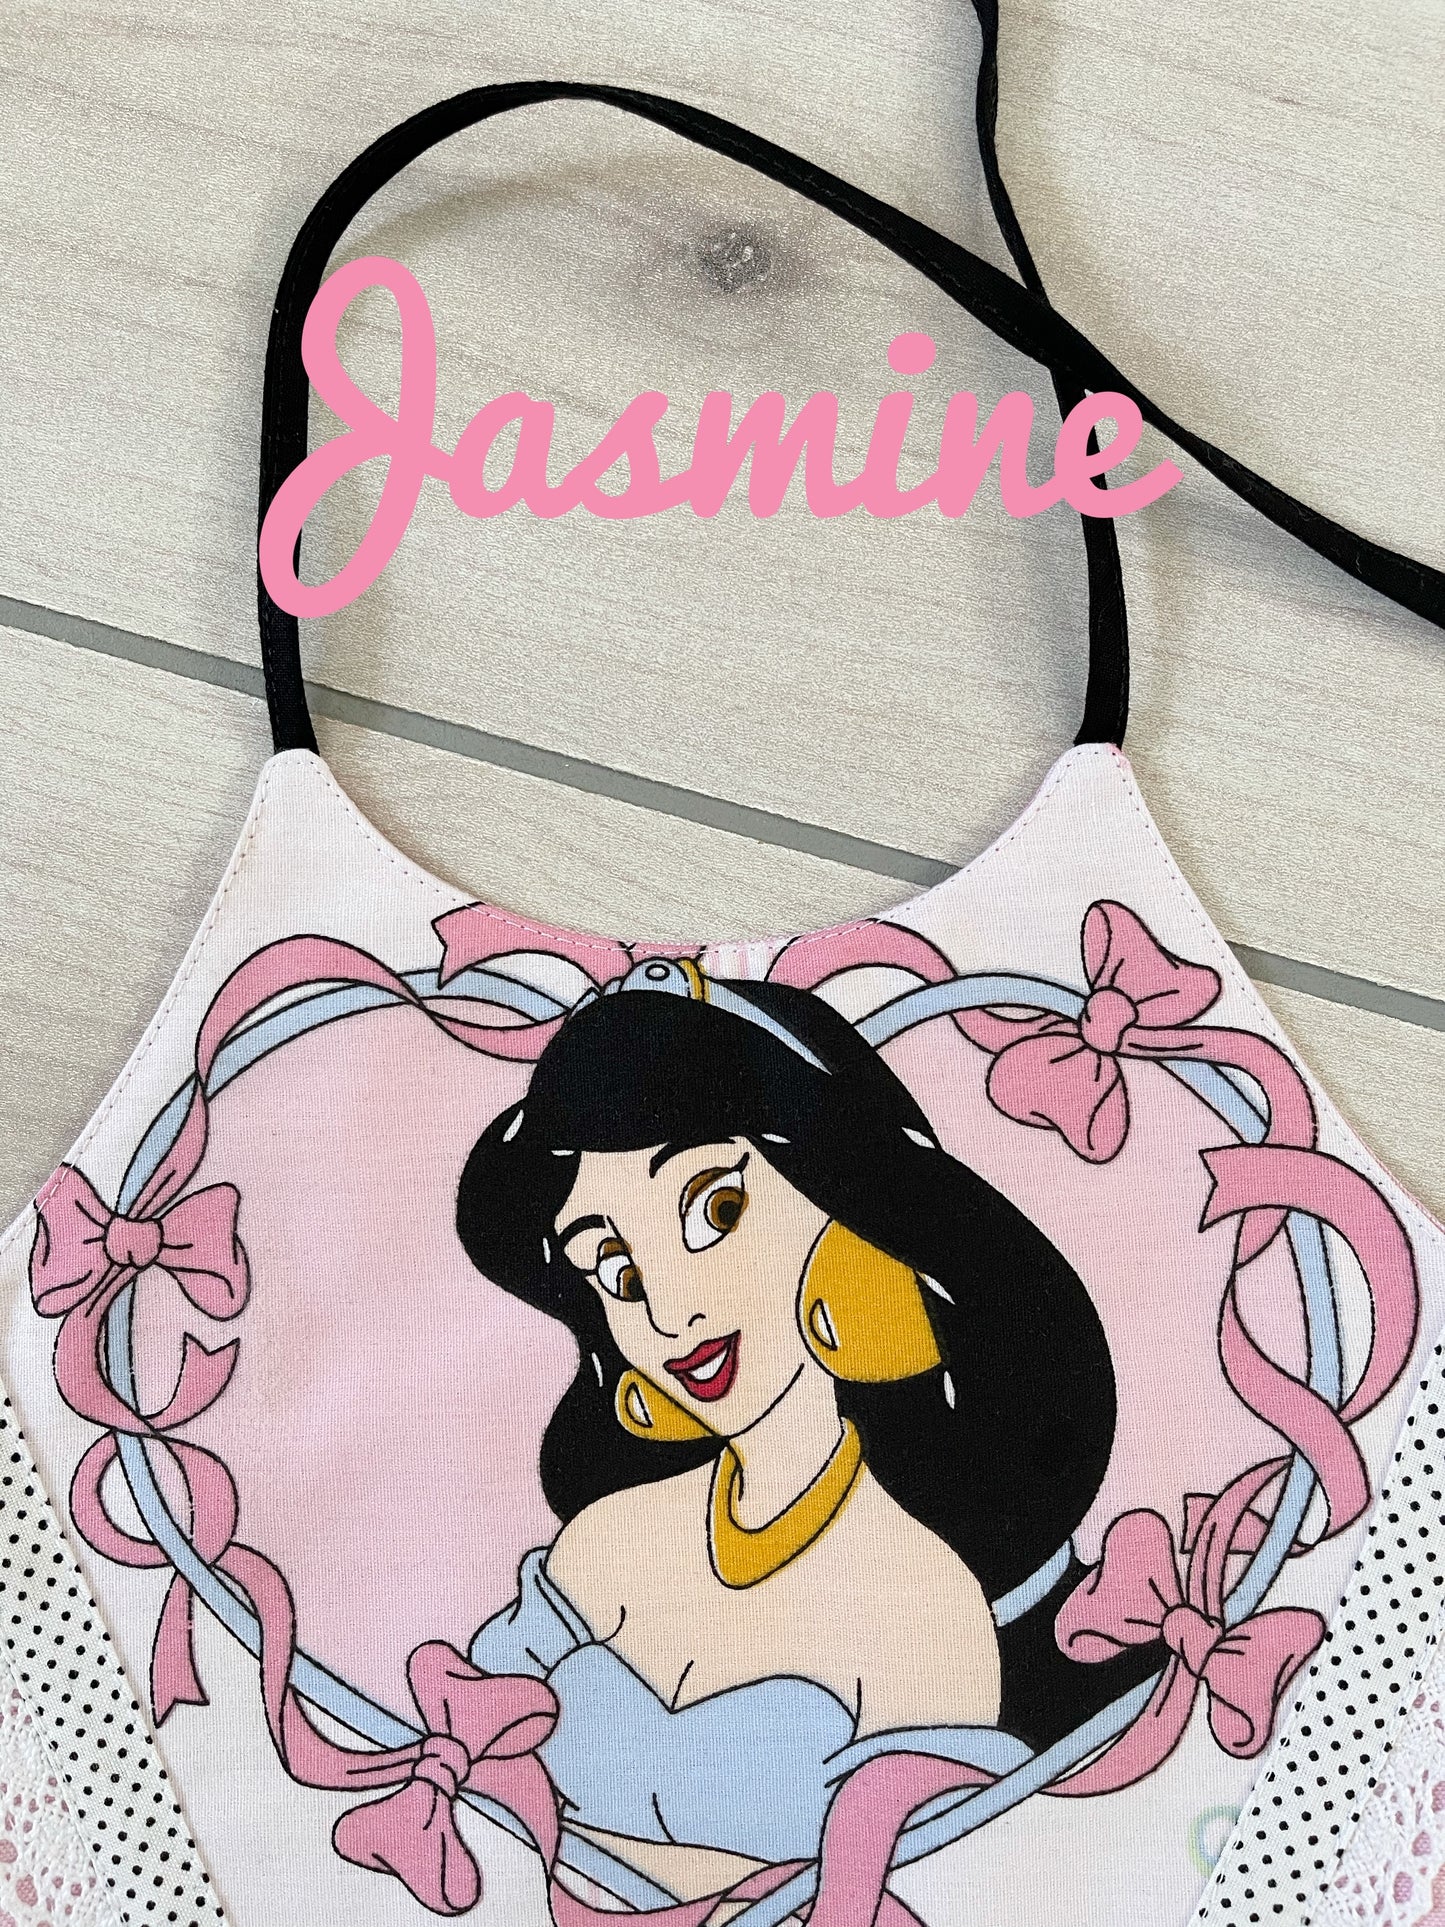 My Vintage Princess "Jasmine"